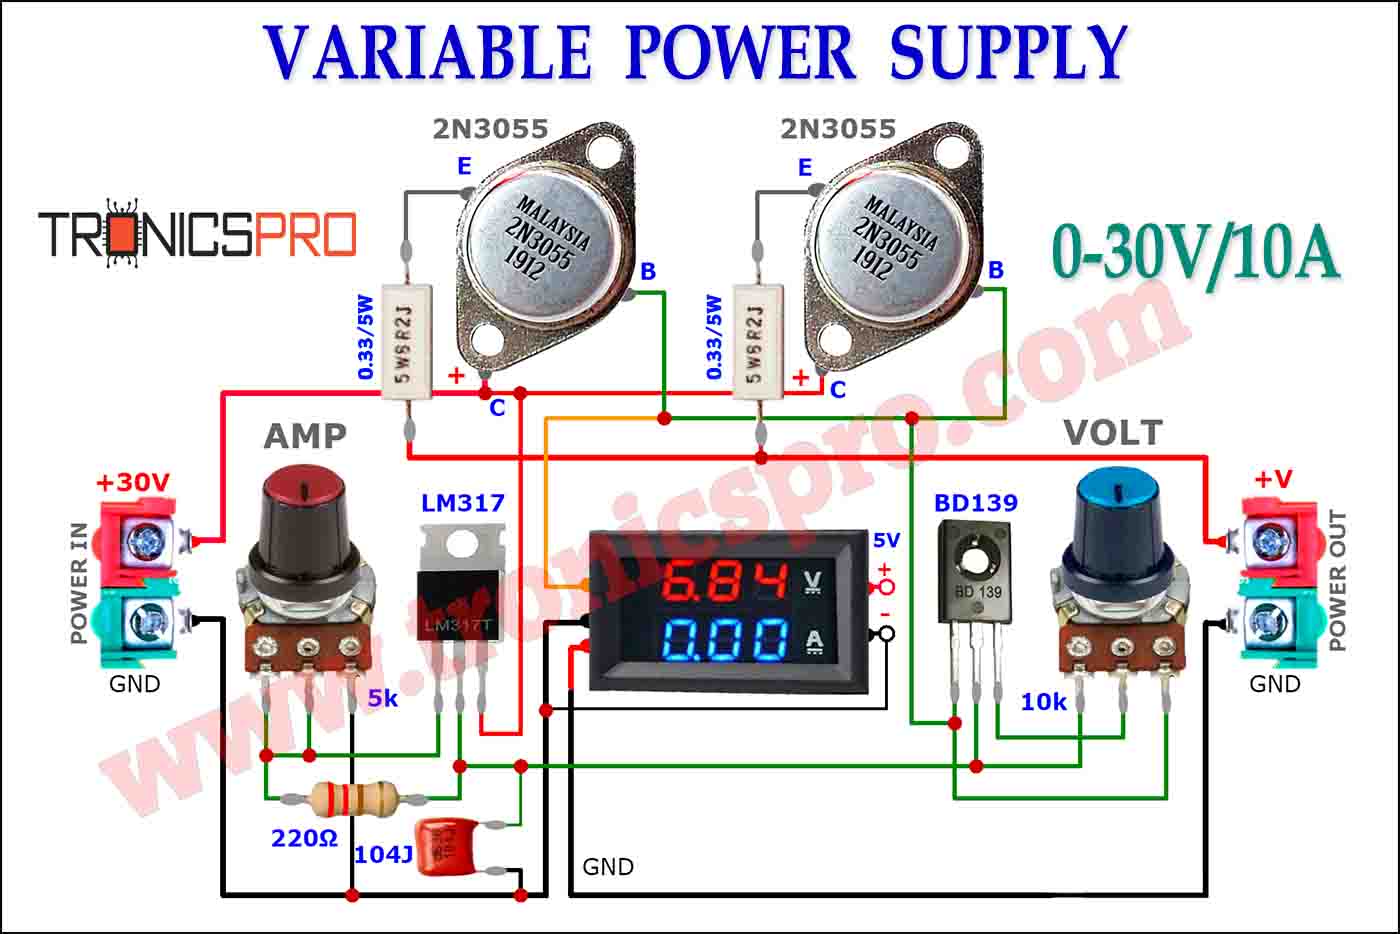 Variable Power Supply 0-30V_10A Circuit Diagram